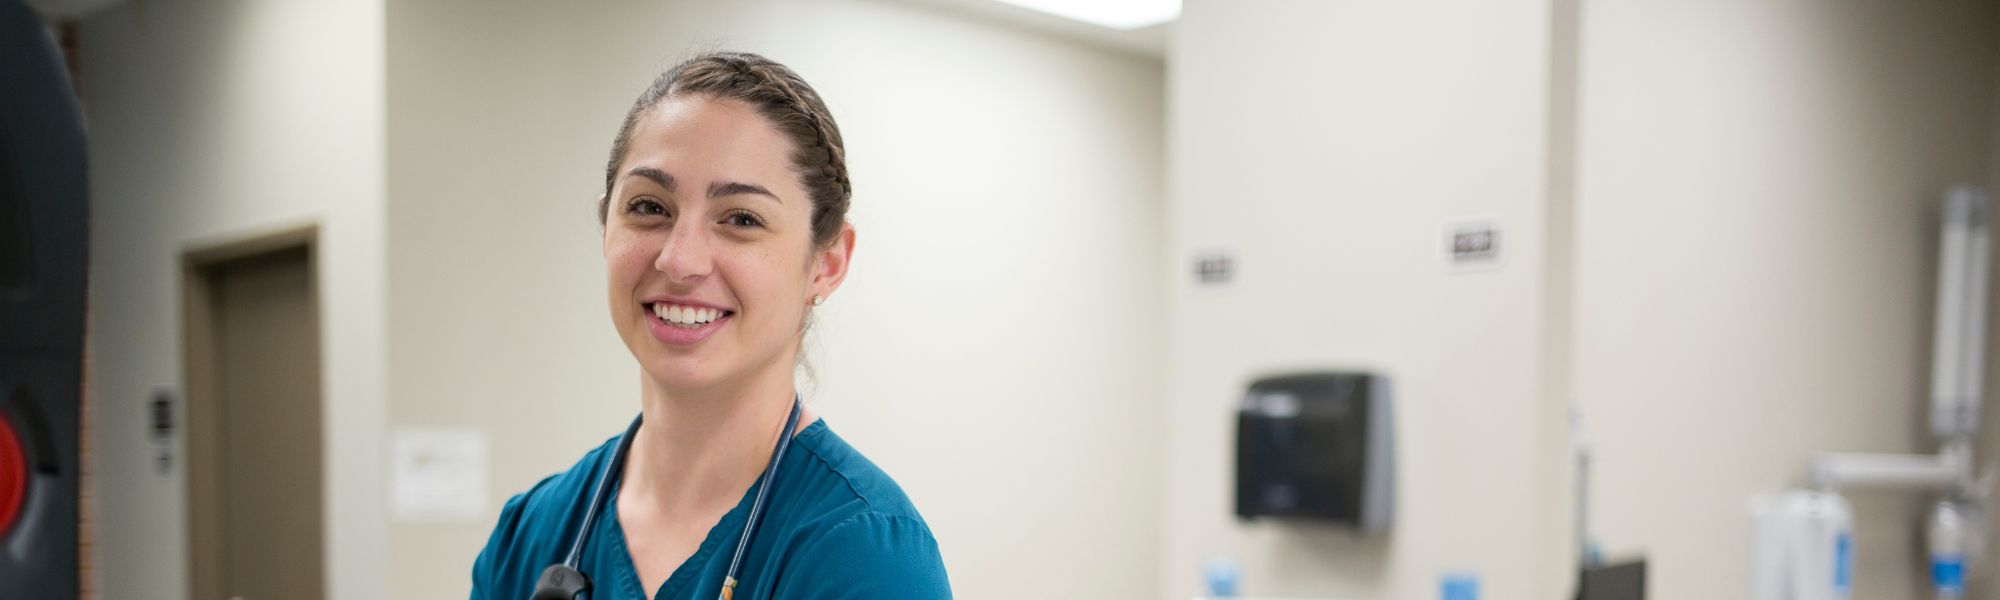 Female nursing student in scrubs smiling.